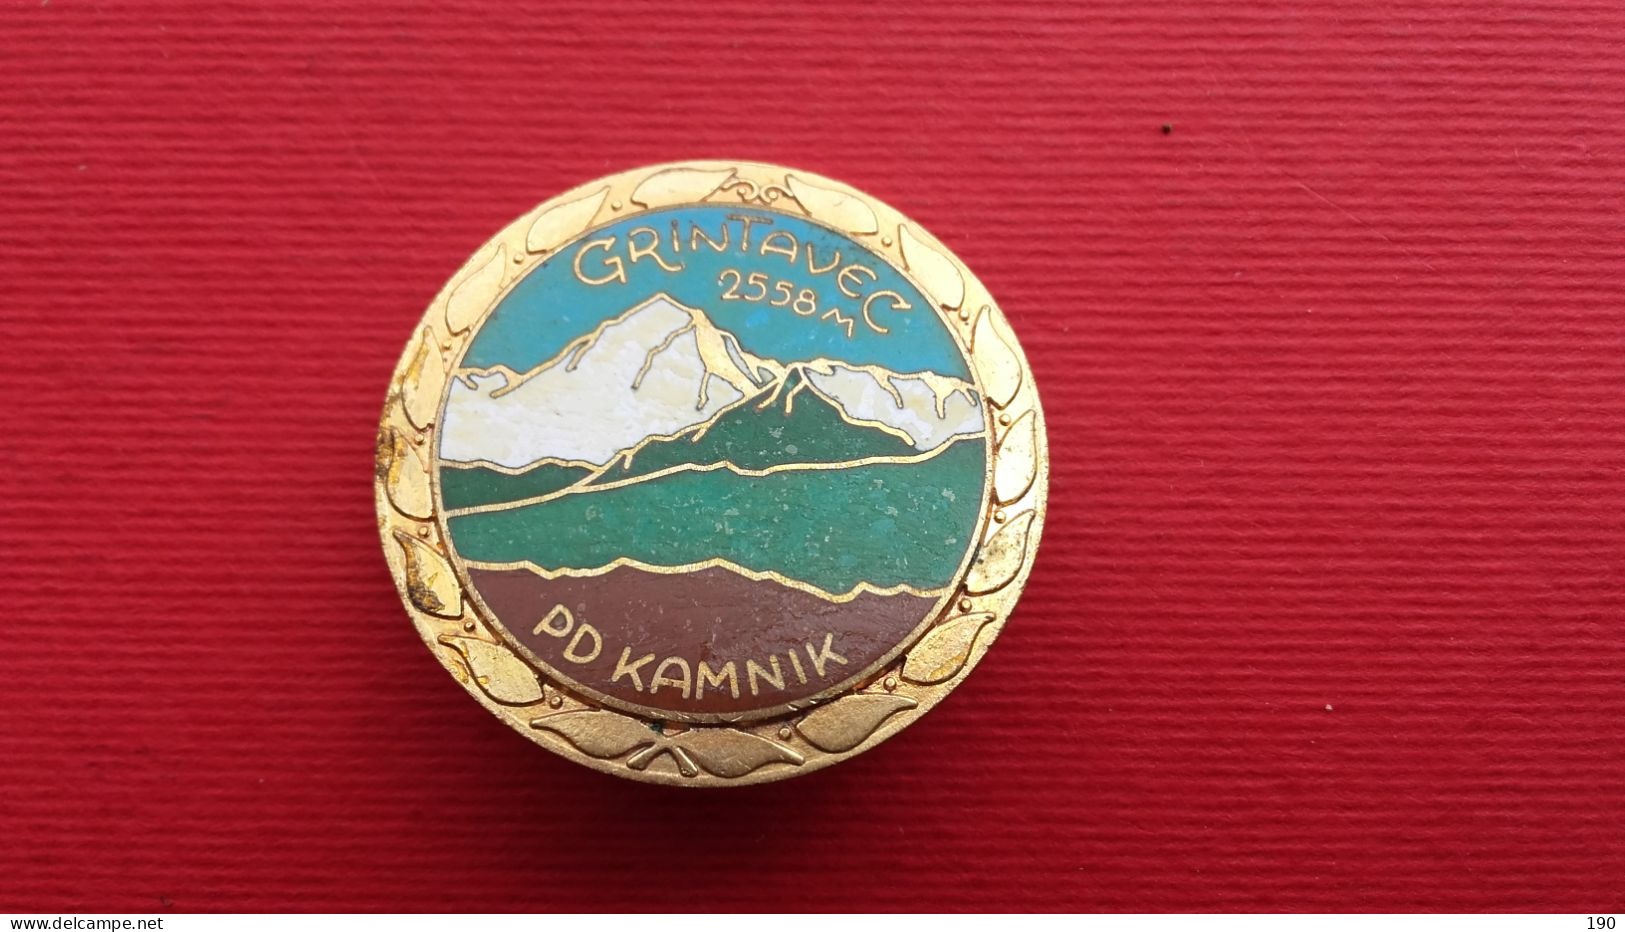 Grintavec.PD Kamnik - Alpinism, Mountaineering